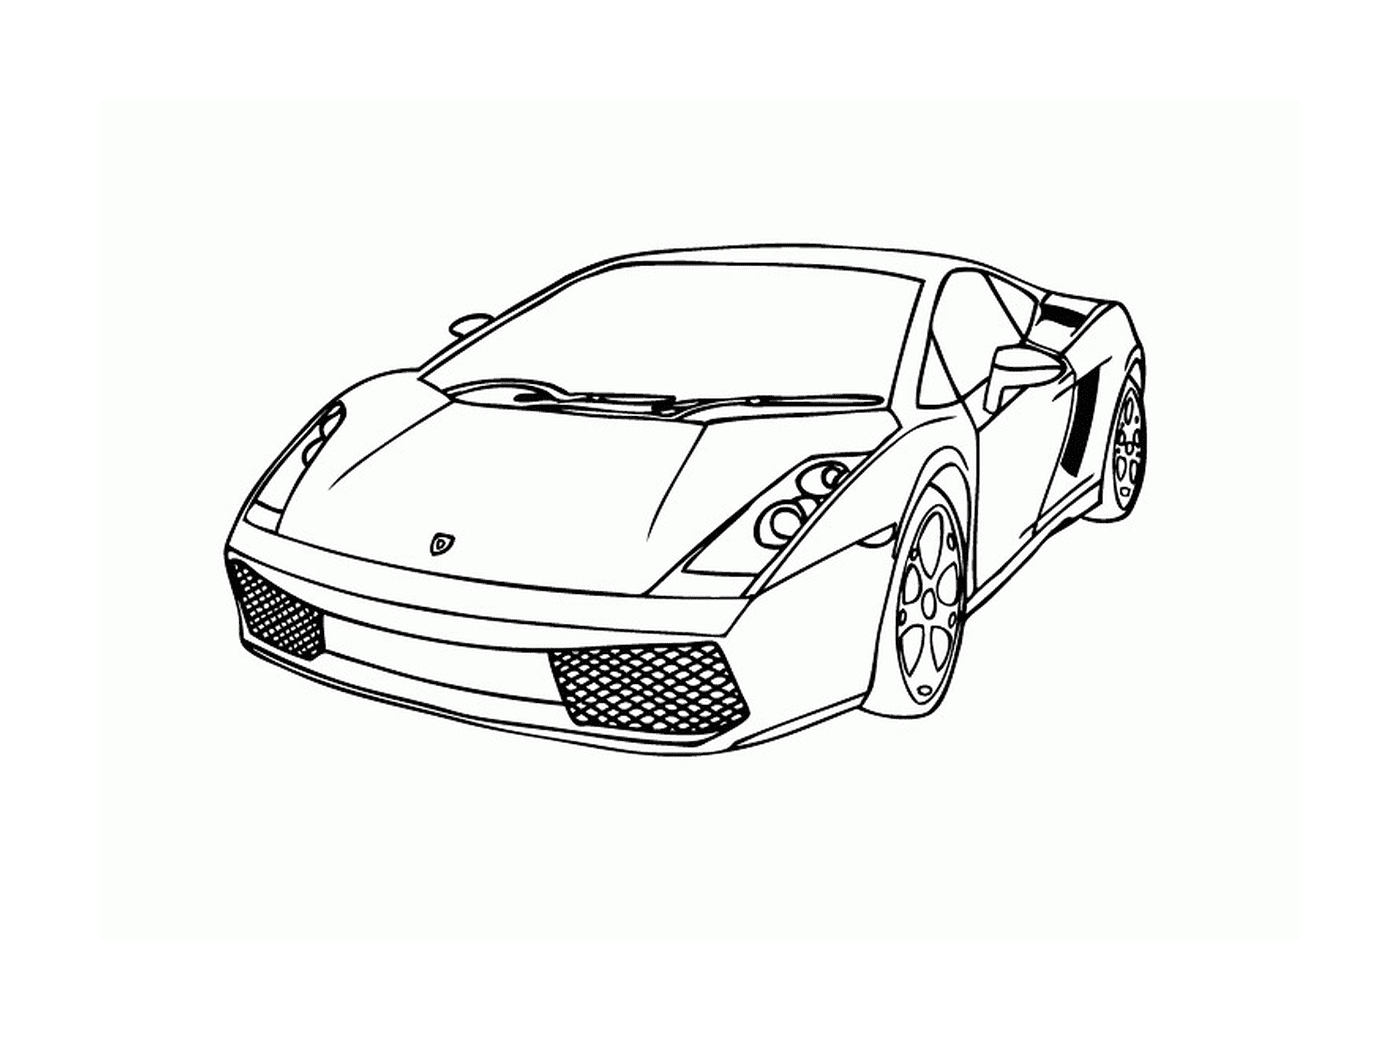  Carros Lamborghini rapidamente 